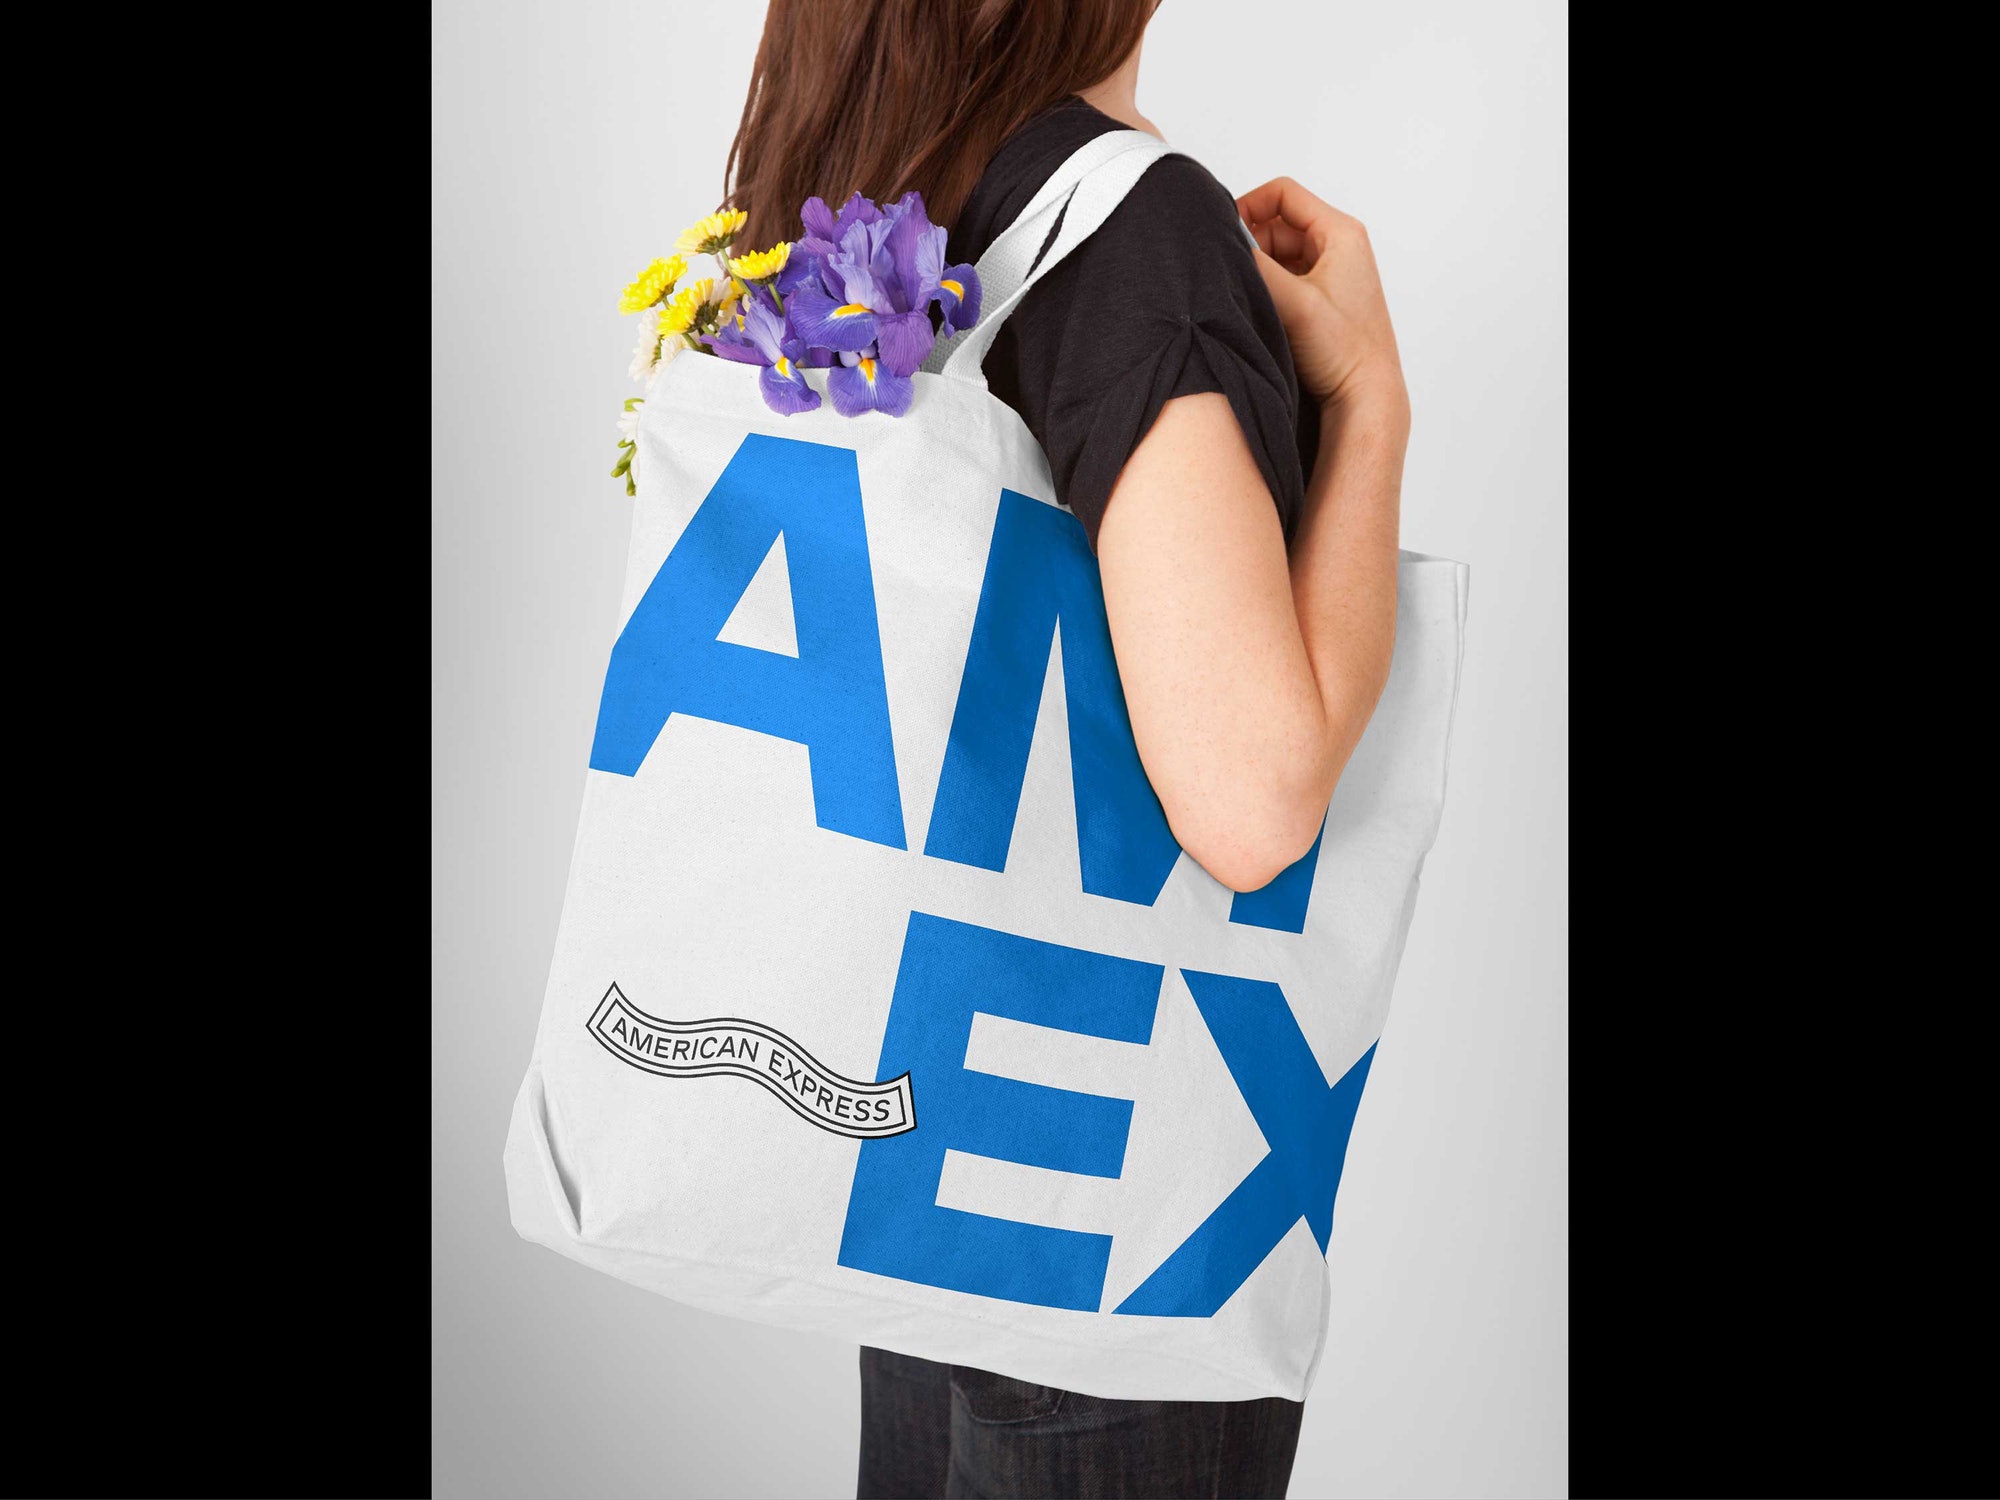 American Express – Bag